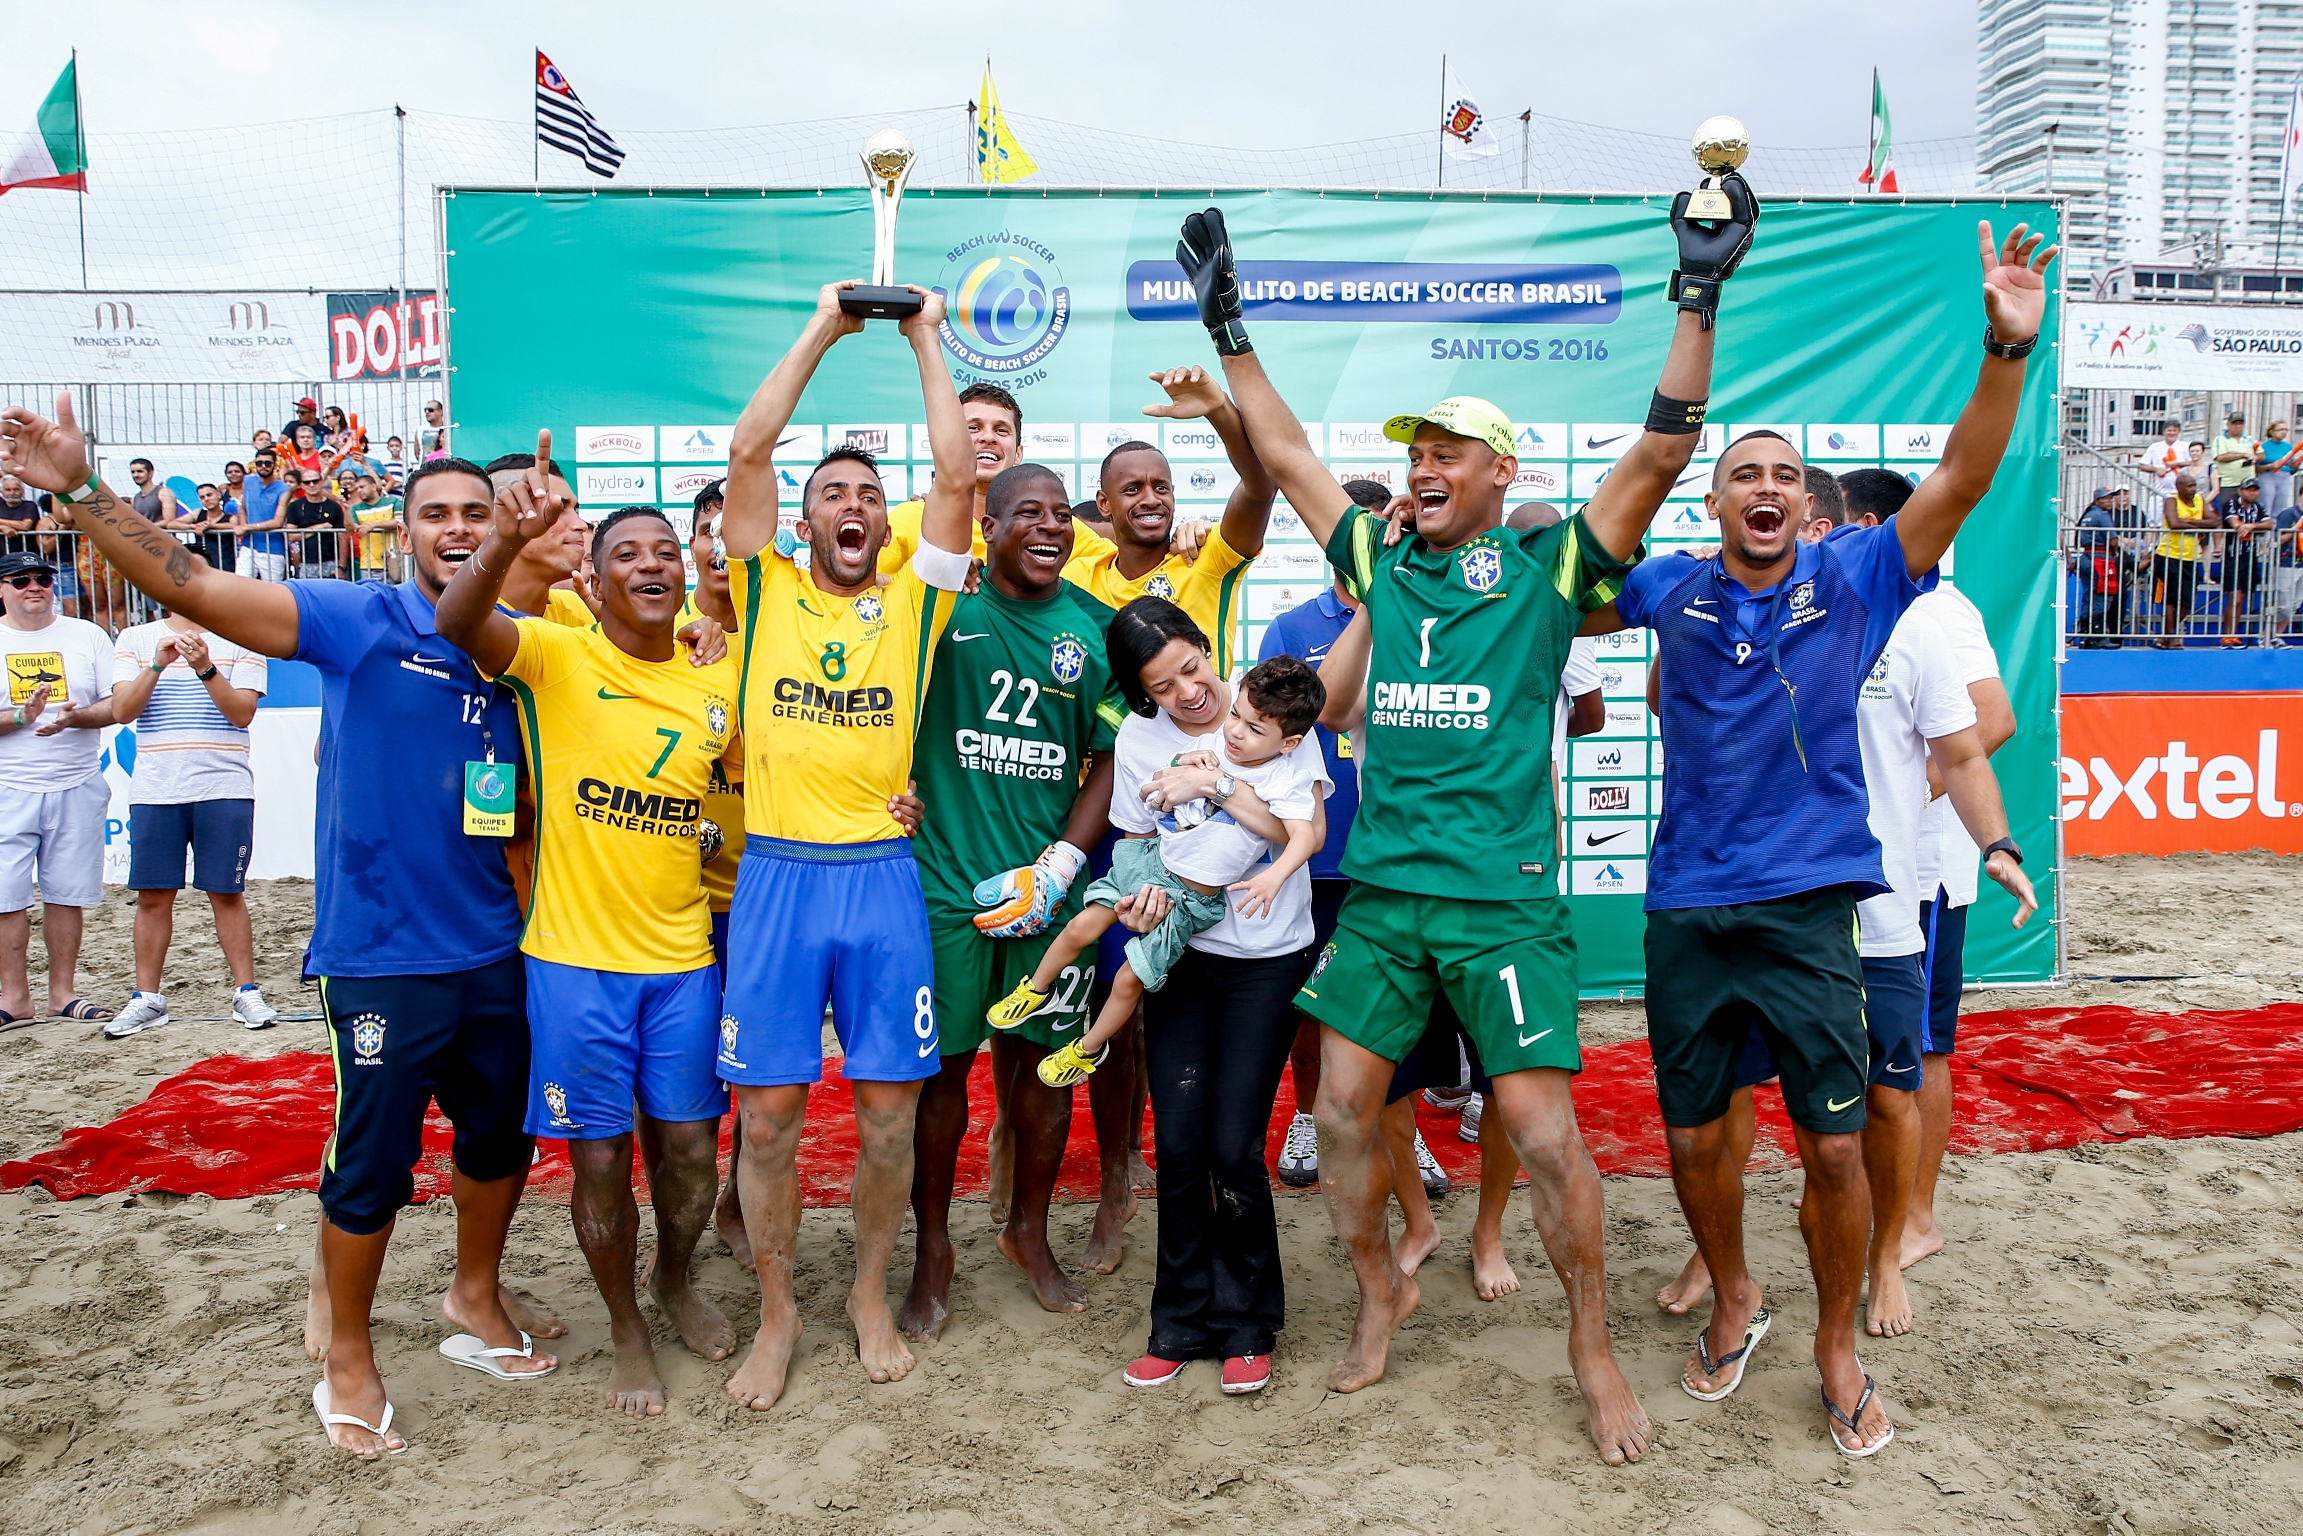 Brasil vence Itália por 8 a 2 e comemora o título do Mundialito nas areias de Santos